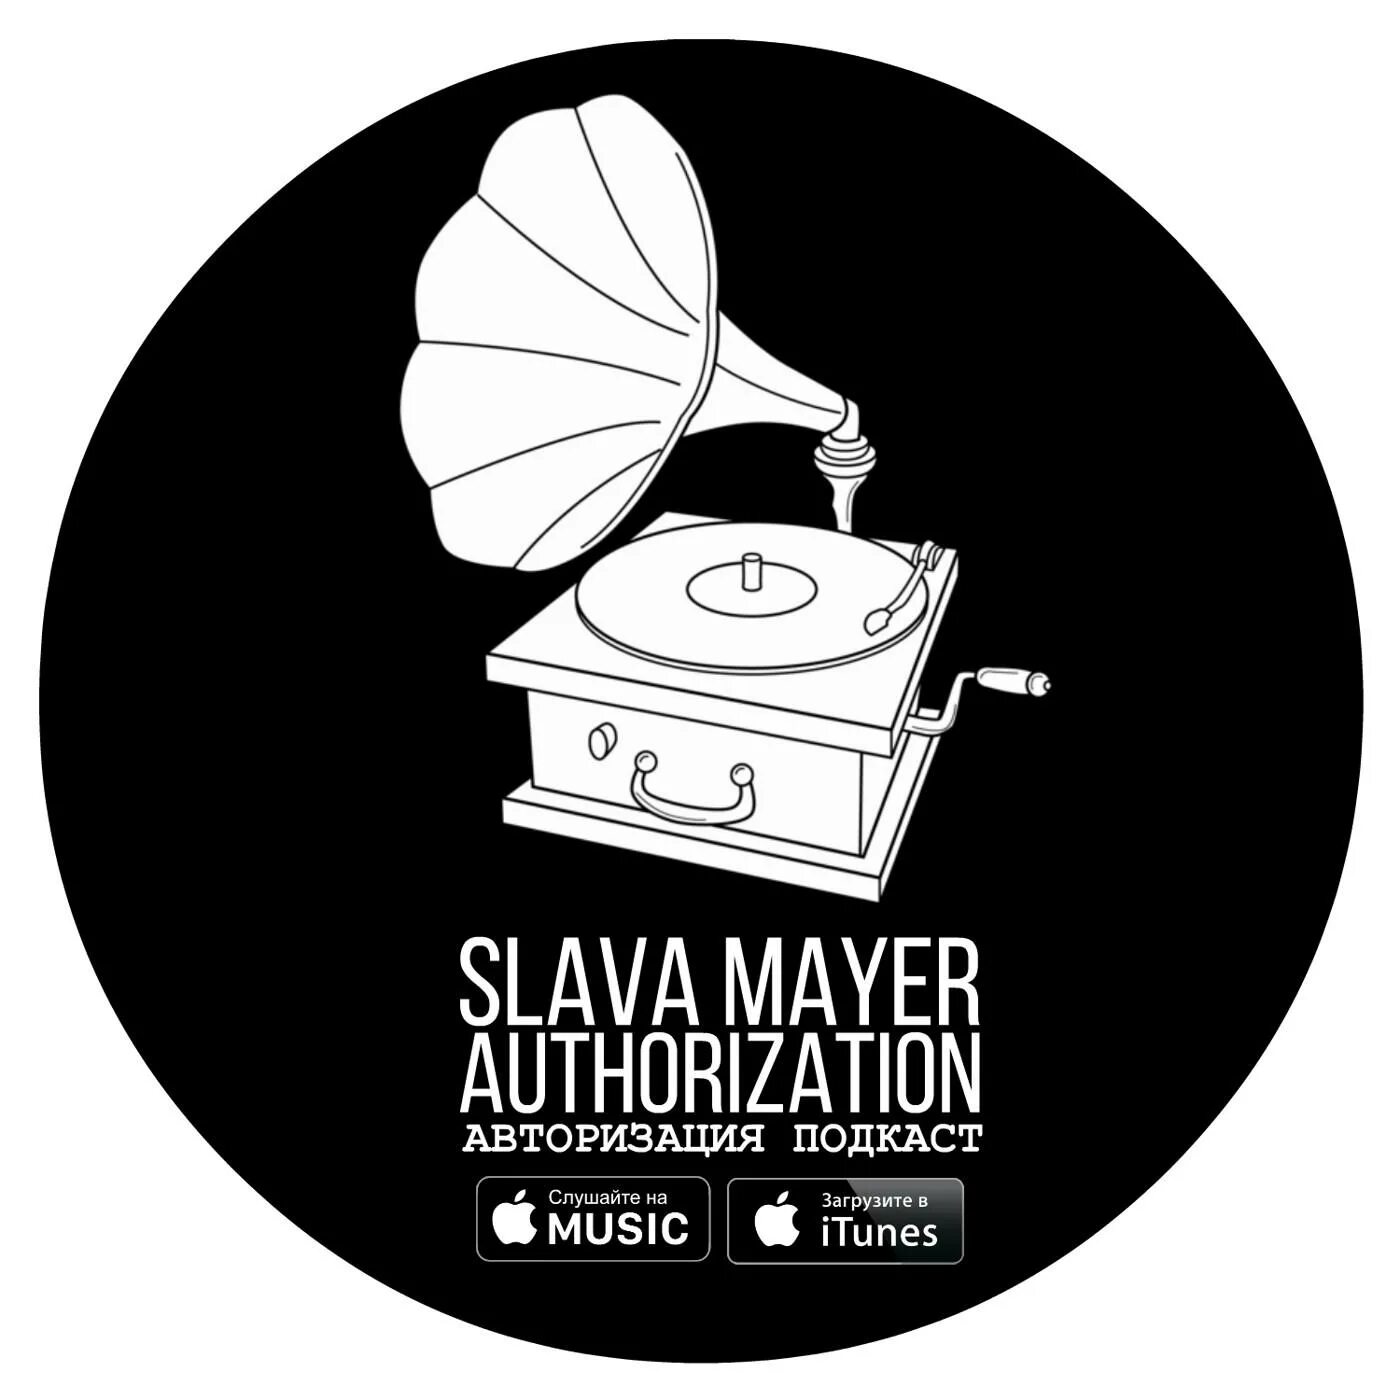 Авторизация музыки. Slava Mayer. Music Podcast. Ашош: подкаст о Музыке подкаст.